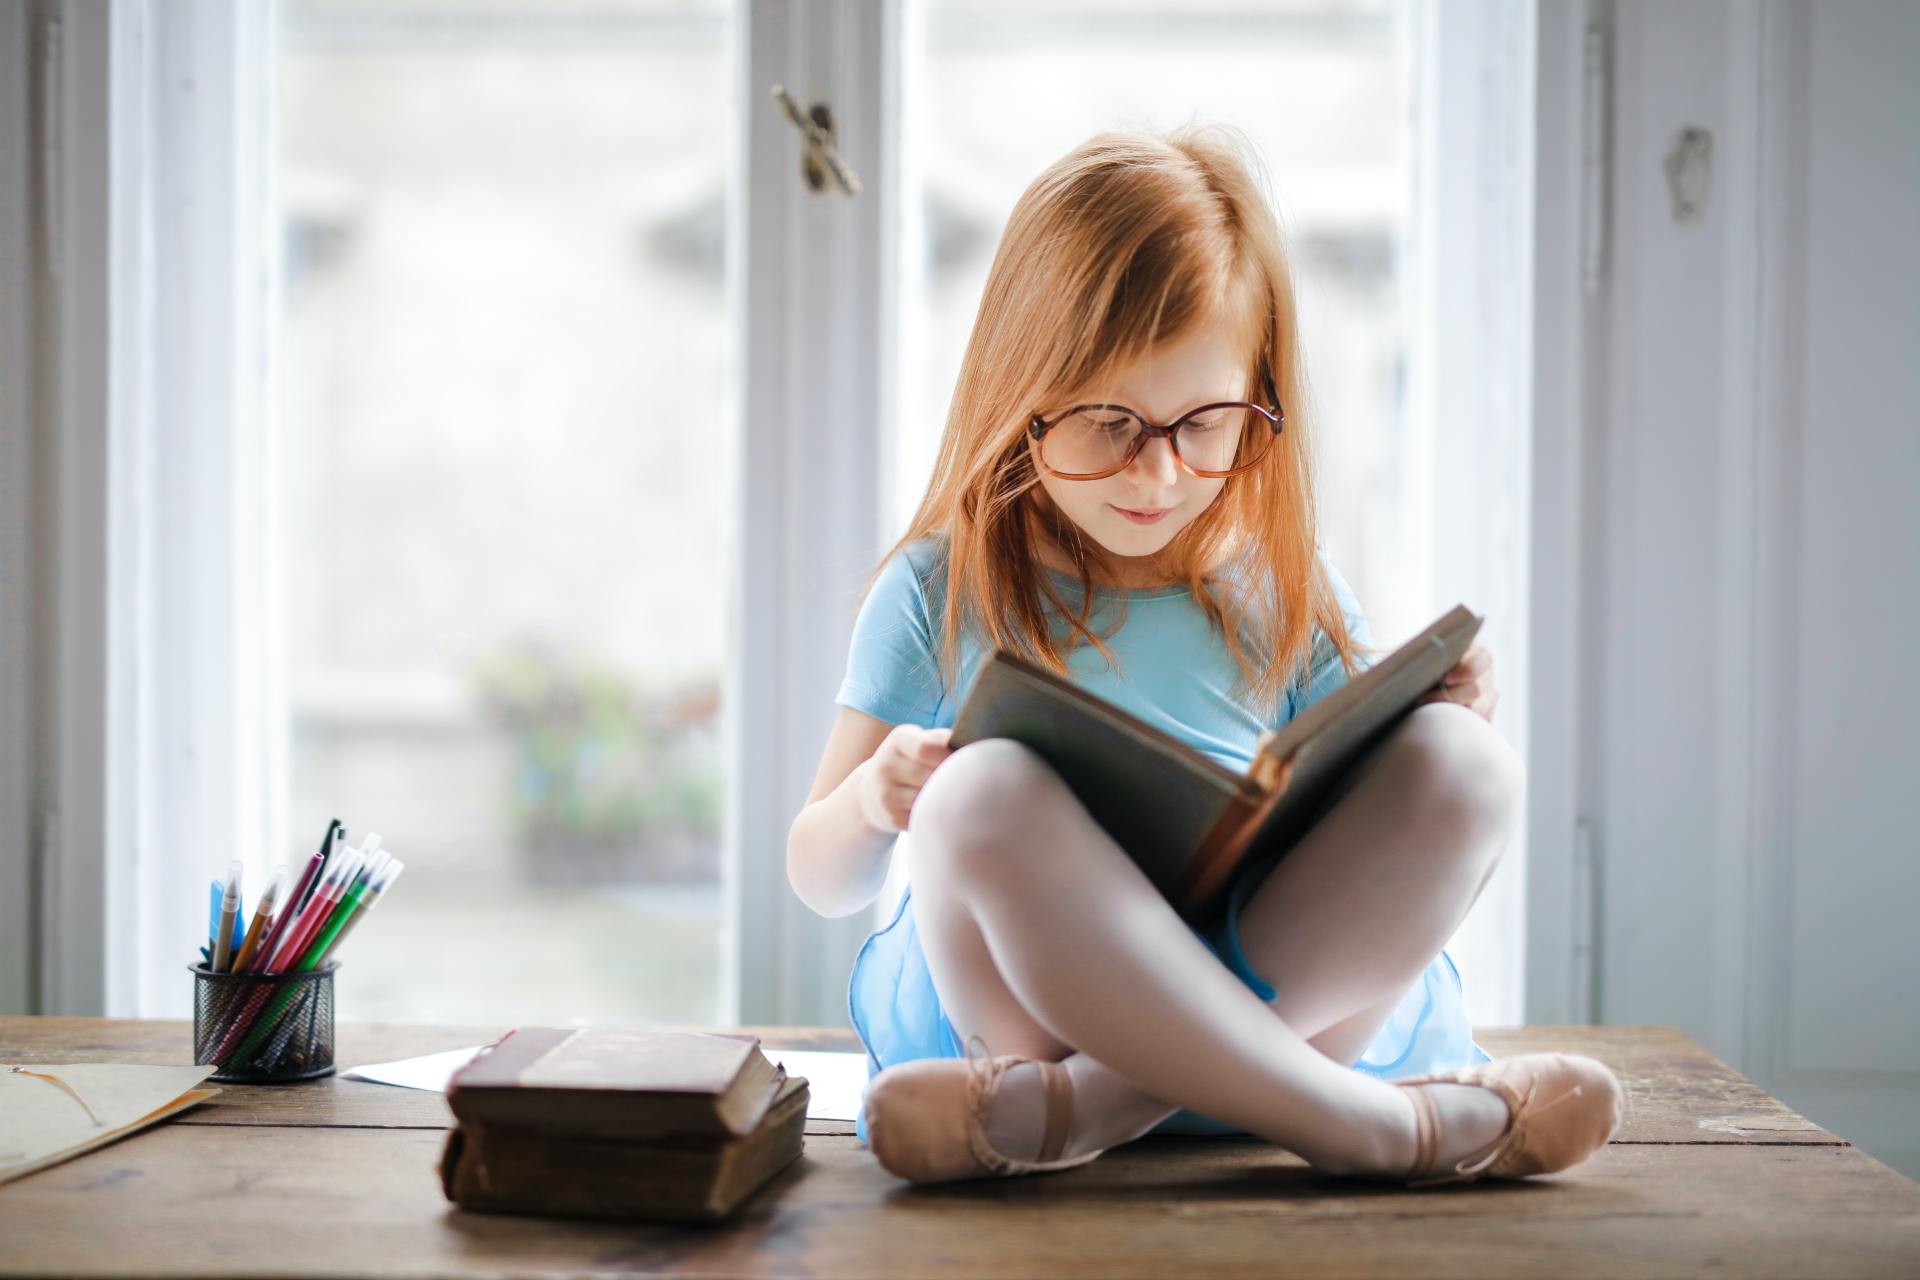 Girl with Glasses Reading Book Burlington optometry